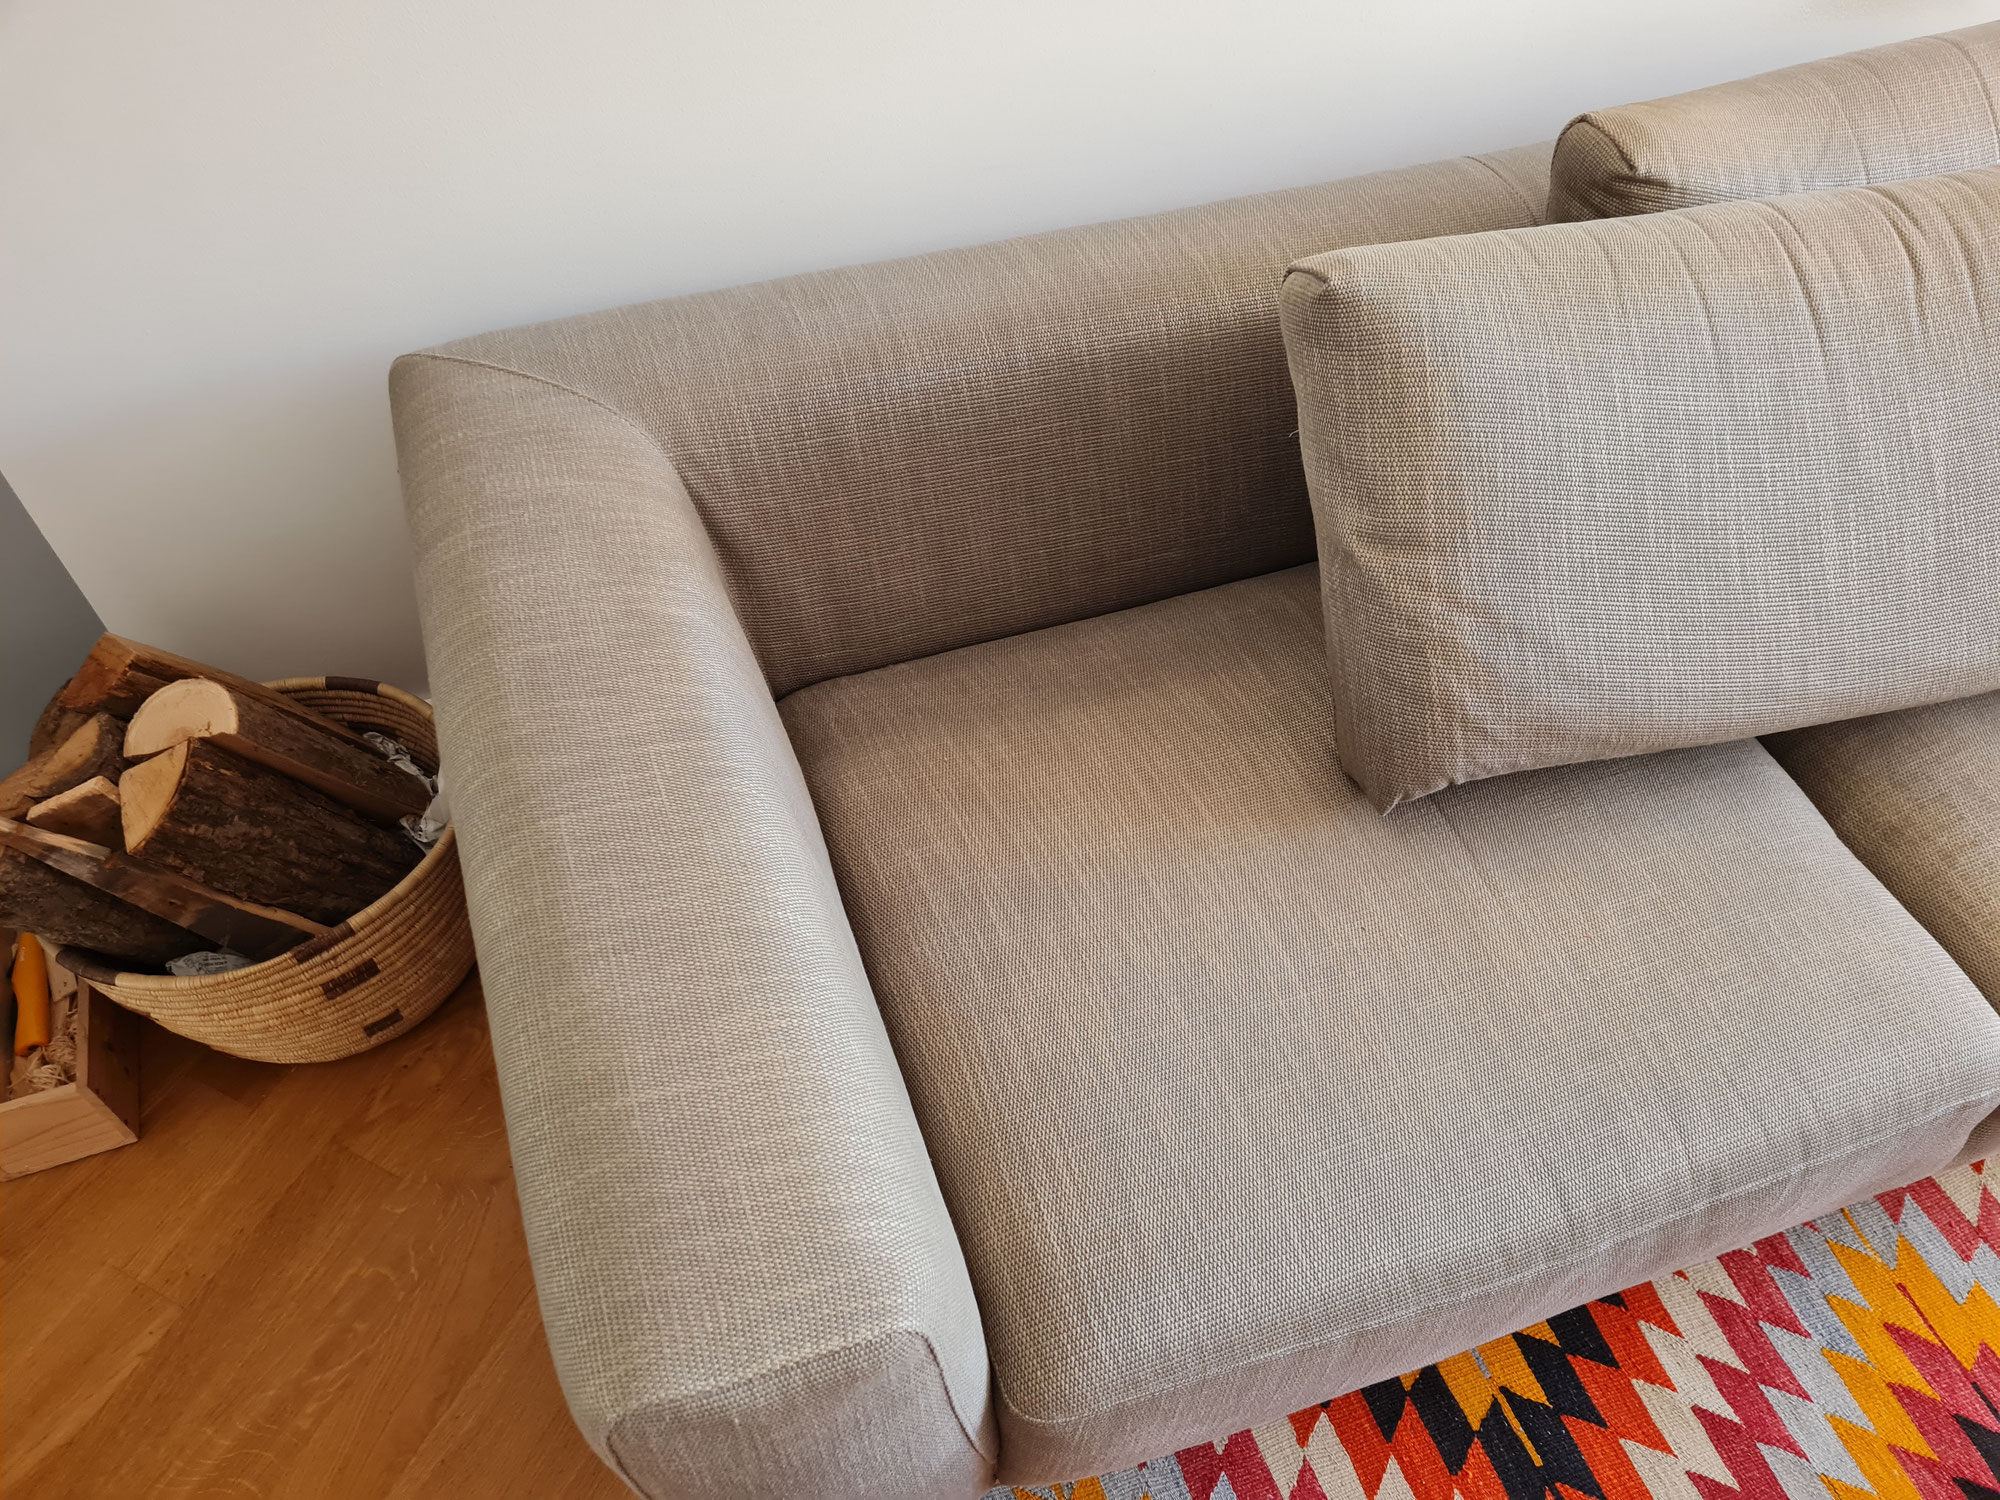 Canapé moderne